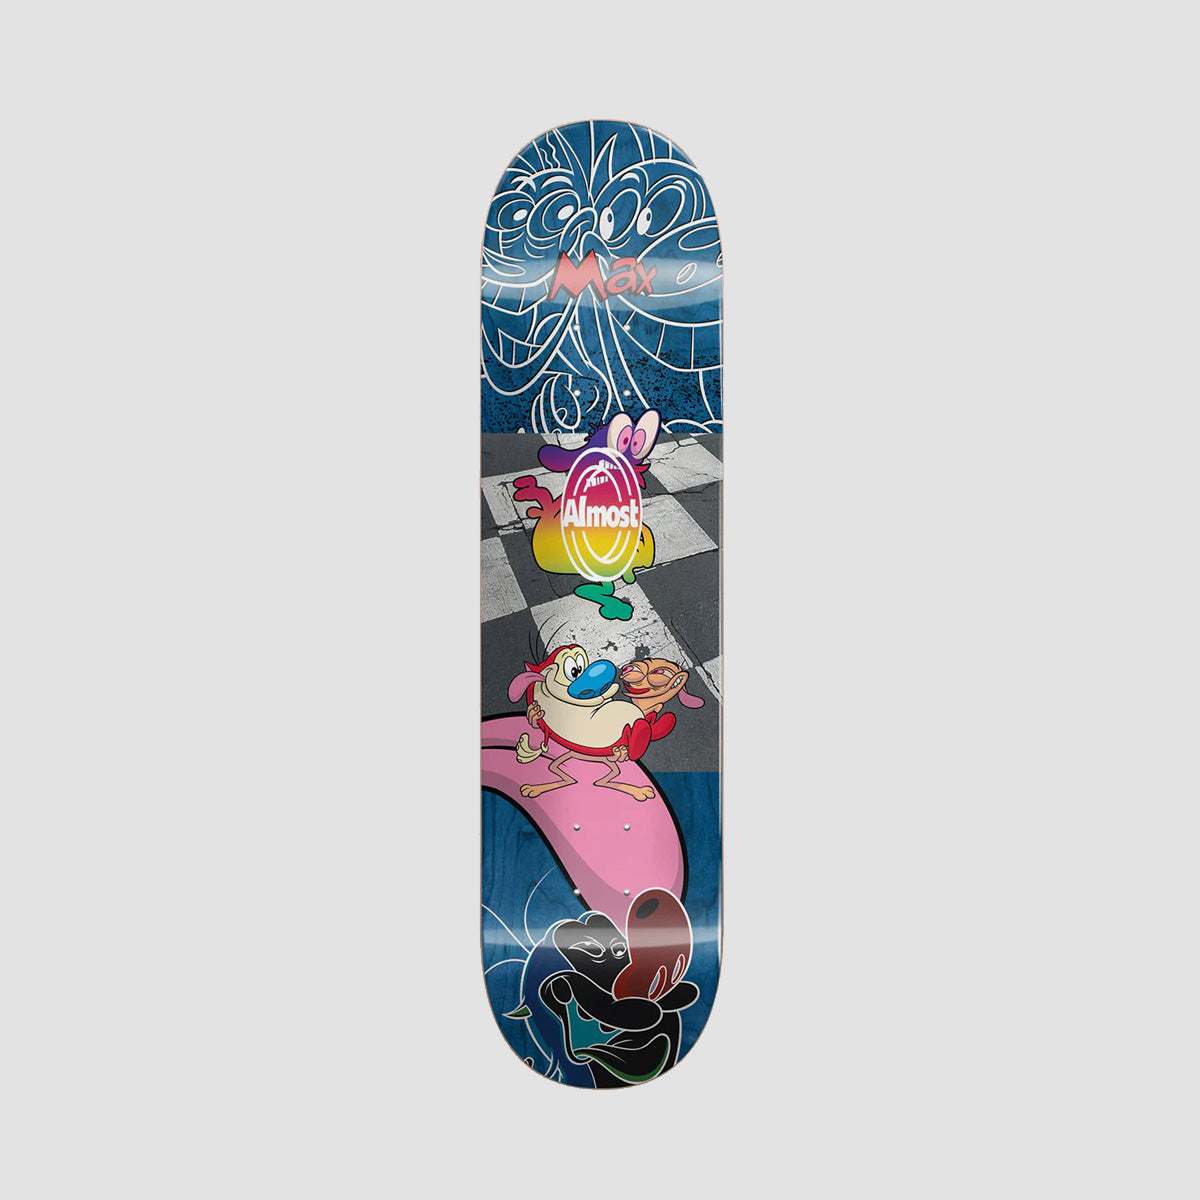 Almost Ren & Stimpy Mixed Up R7 Skateboard Deck Max Geronzi - 8.5"